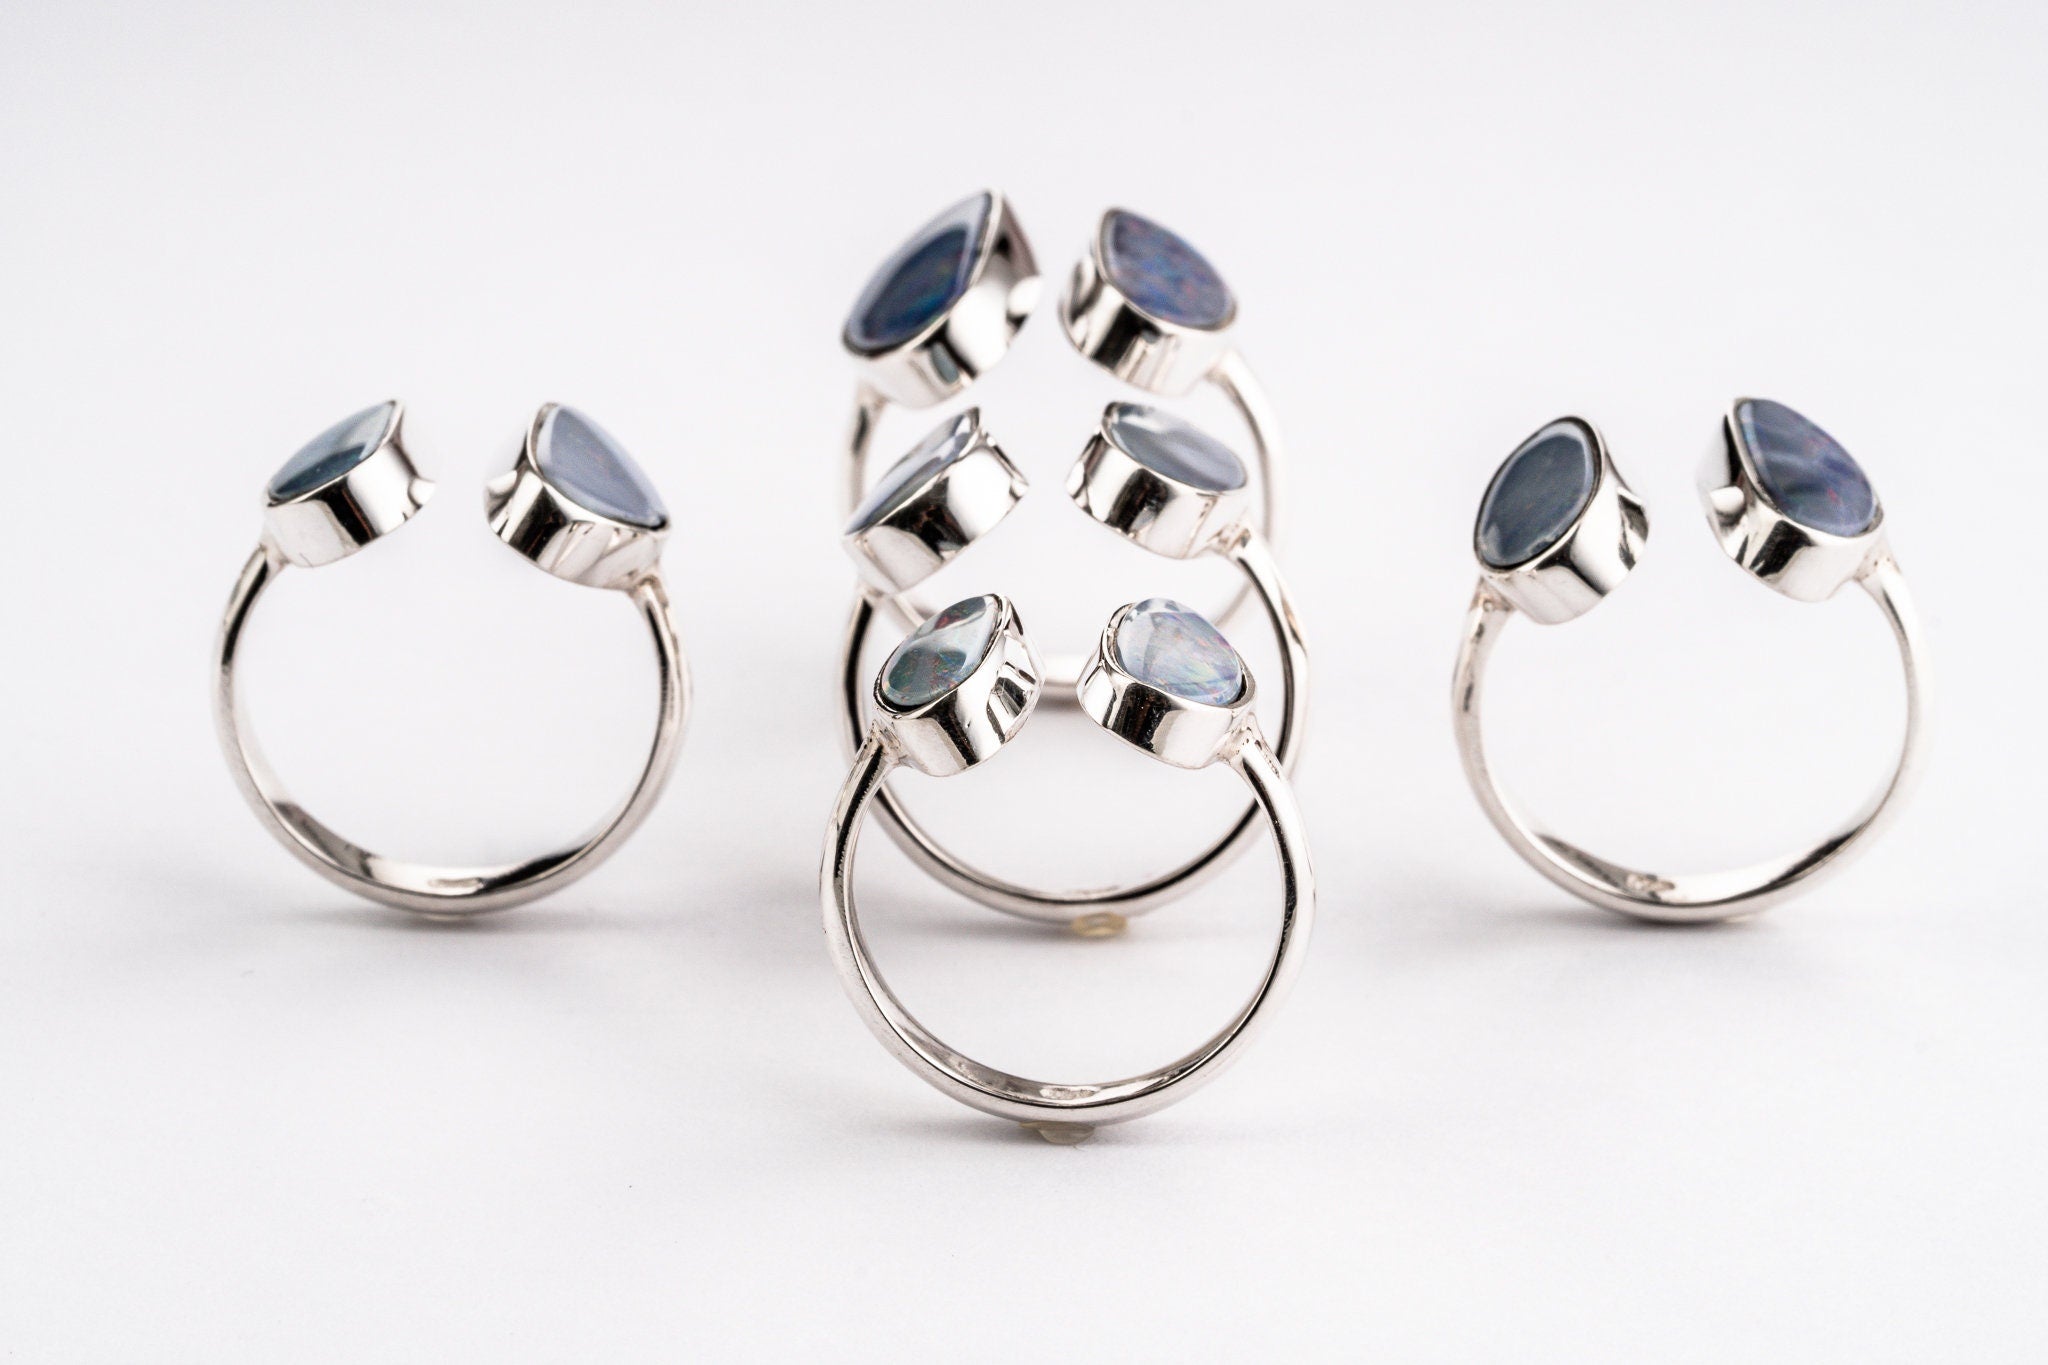 Australian Opal Doublet - Double Stone Open Ring - Adjustable Size 5-9 US - 925 Sterling Silver